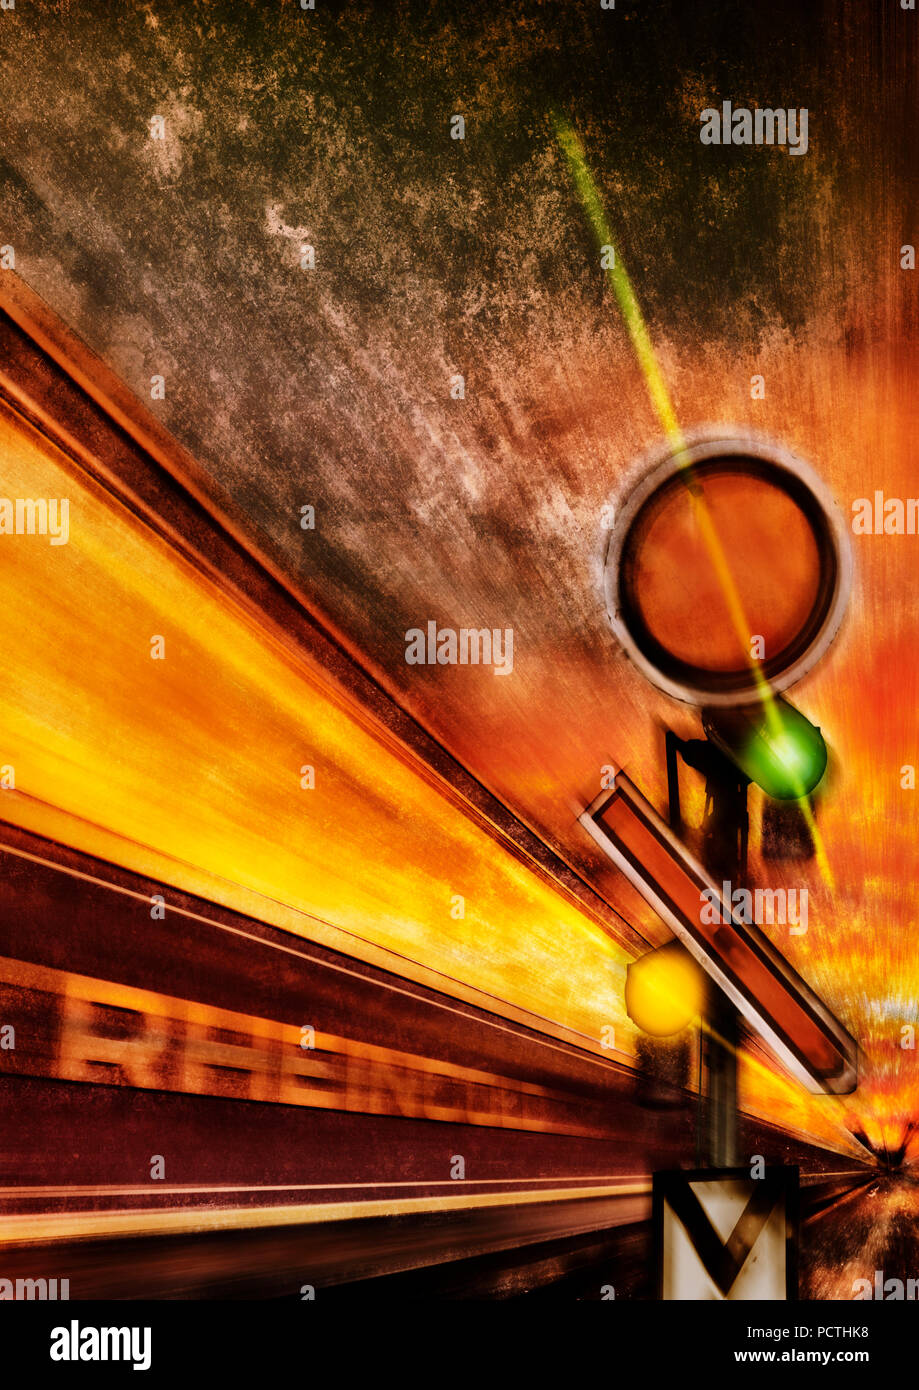 Train, Passenger Cars, writing, Sky, Evening Scene, Blurred Motion, Signal, [M], Graphic, Rail Art Stock Photo